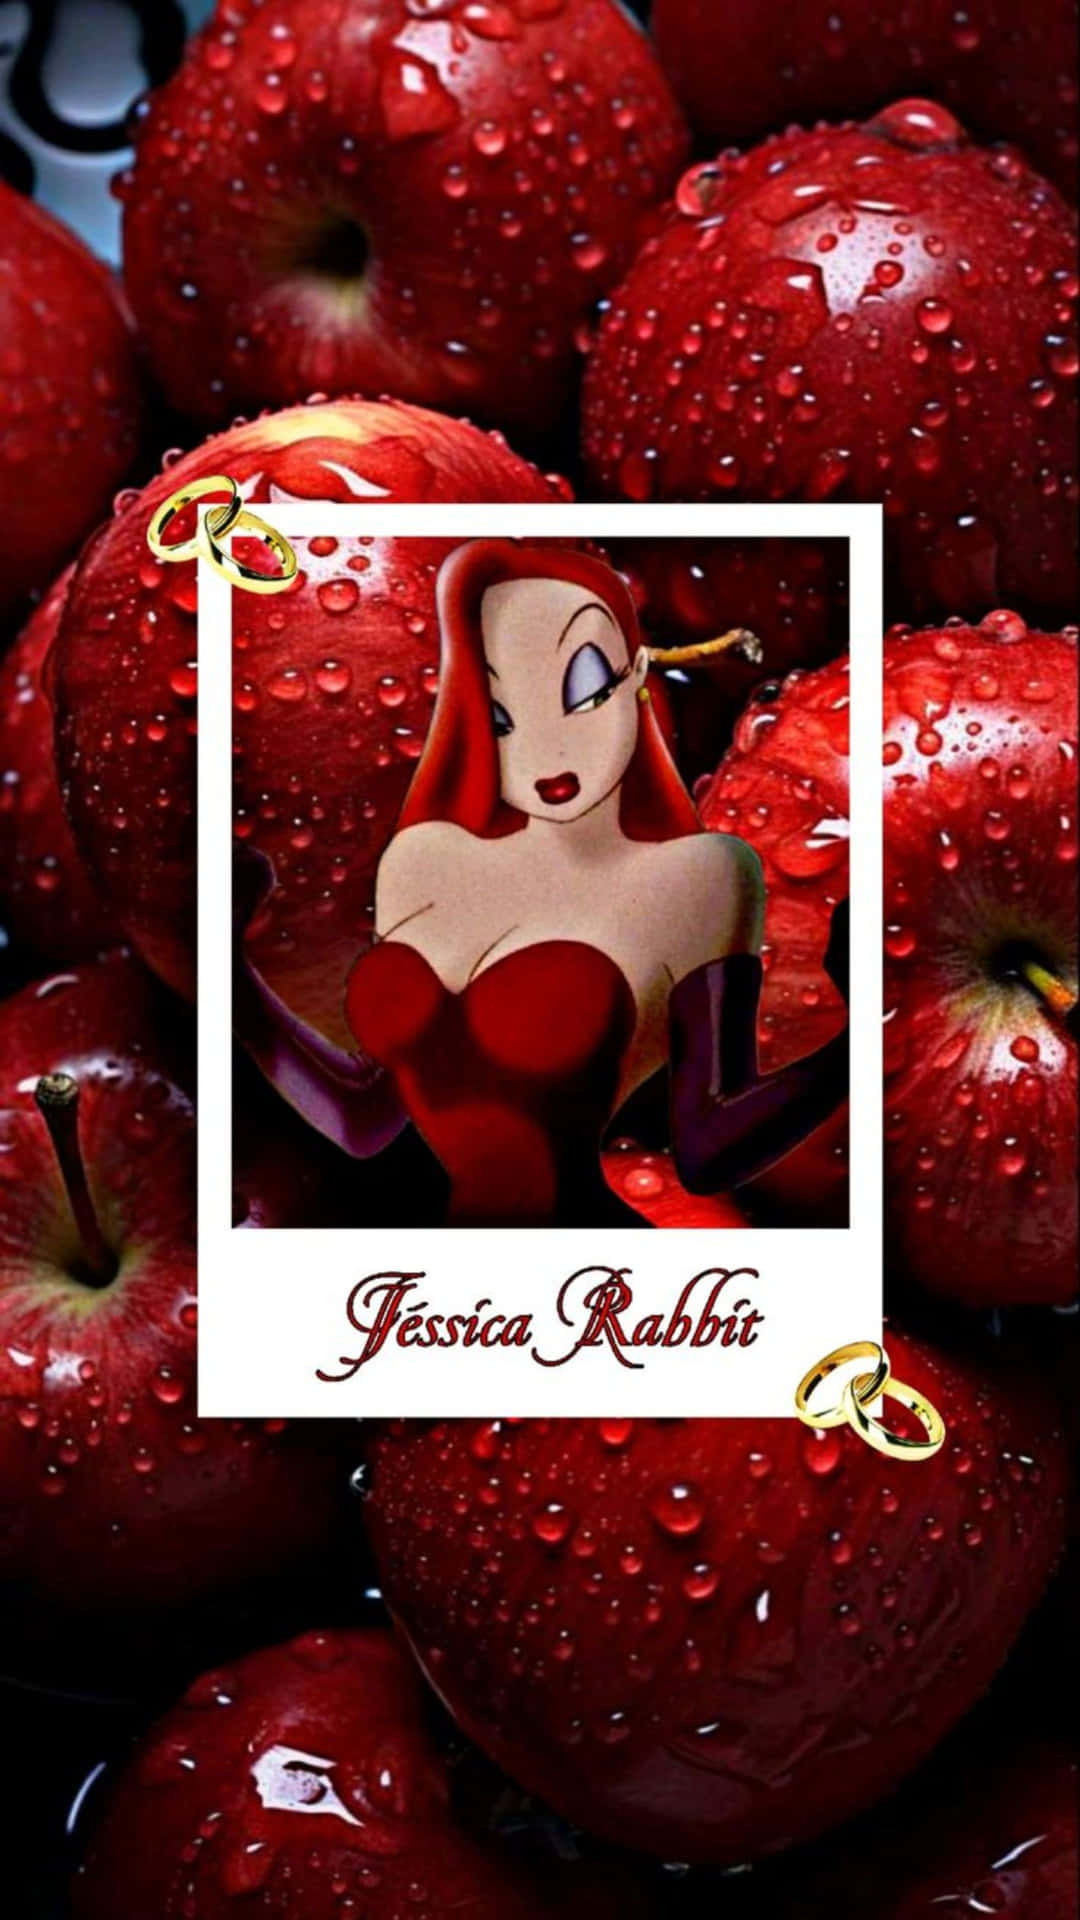 Jessica Rabbit Red Apples Background